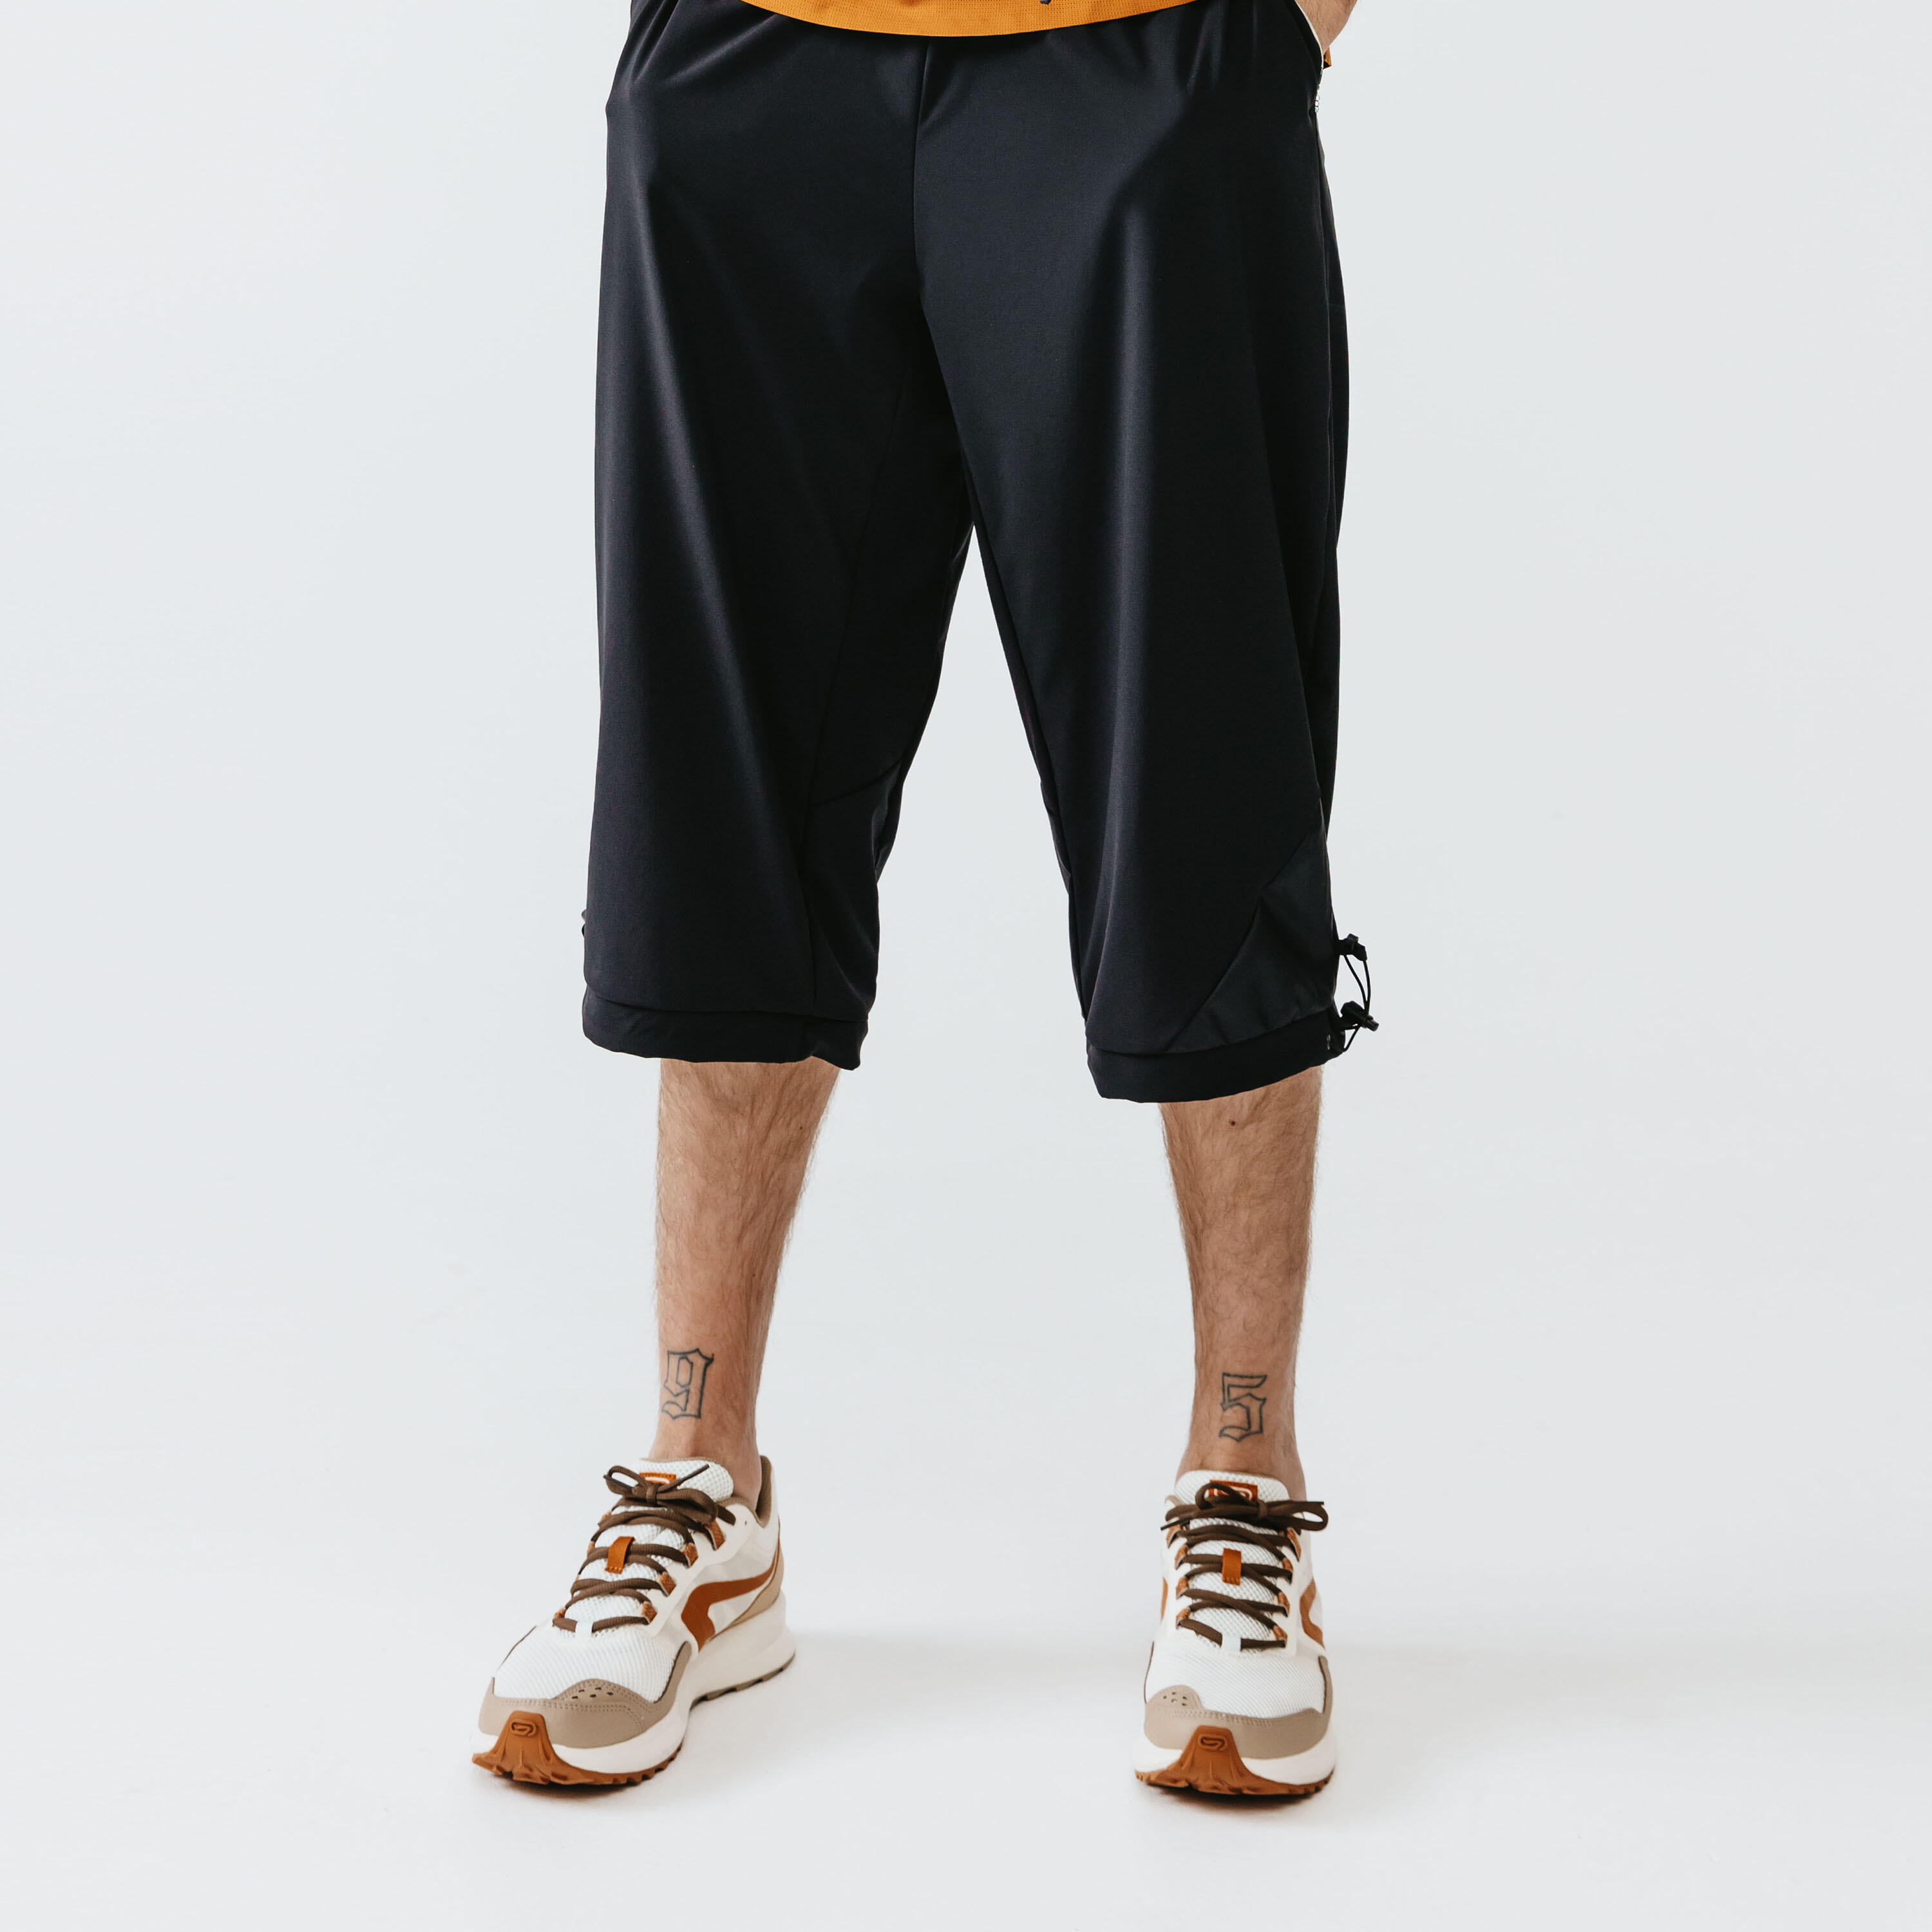 Buy Multi Shorts  34ths for Men by FEEL TRACK Online  Ajiocom